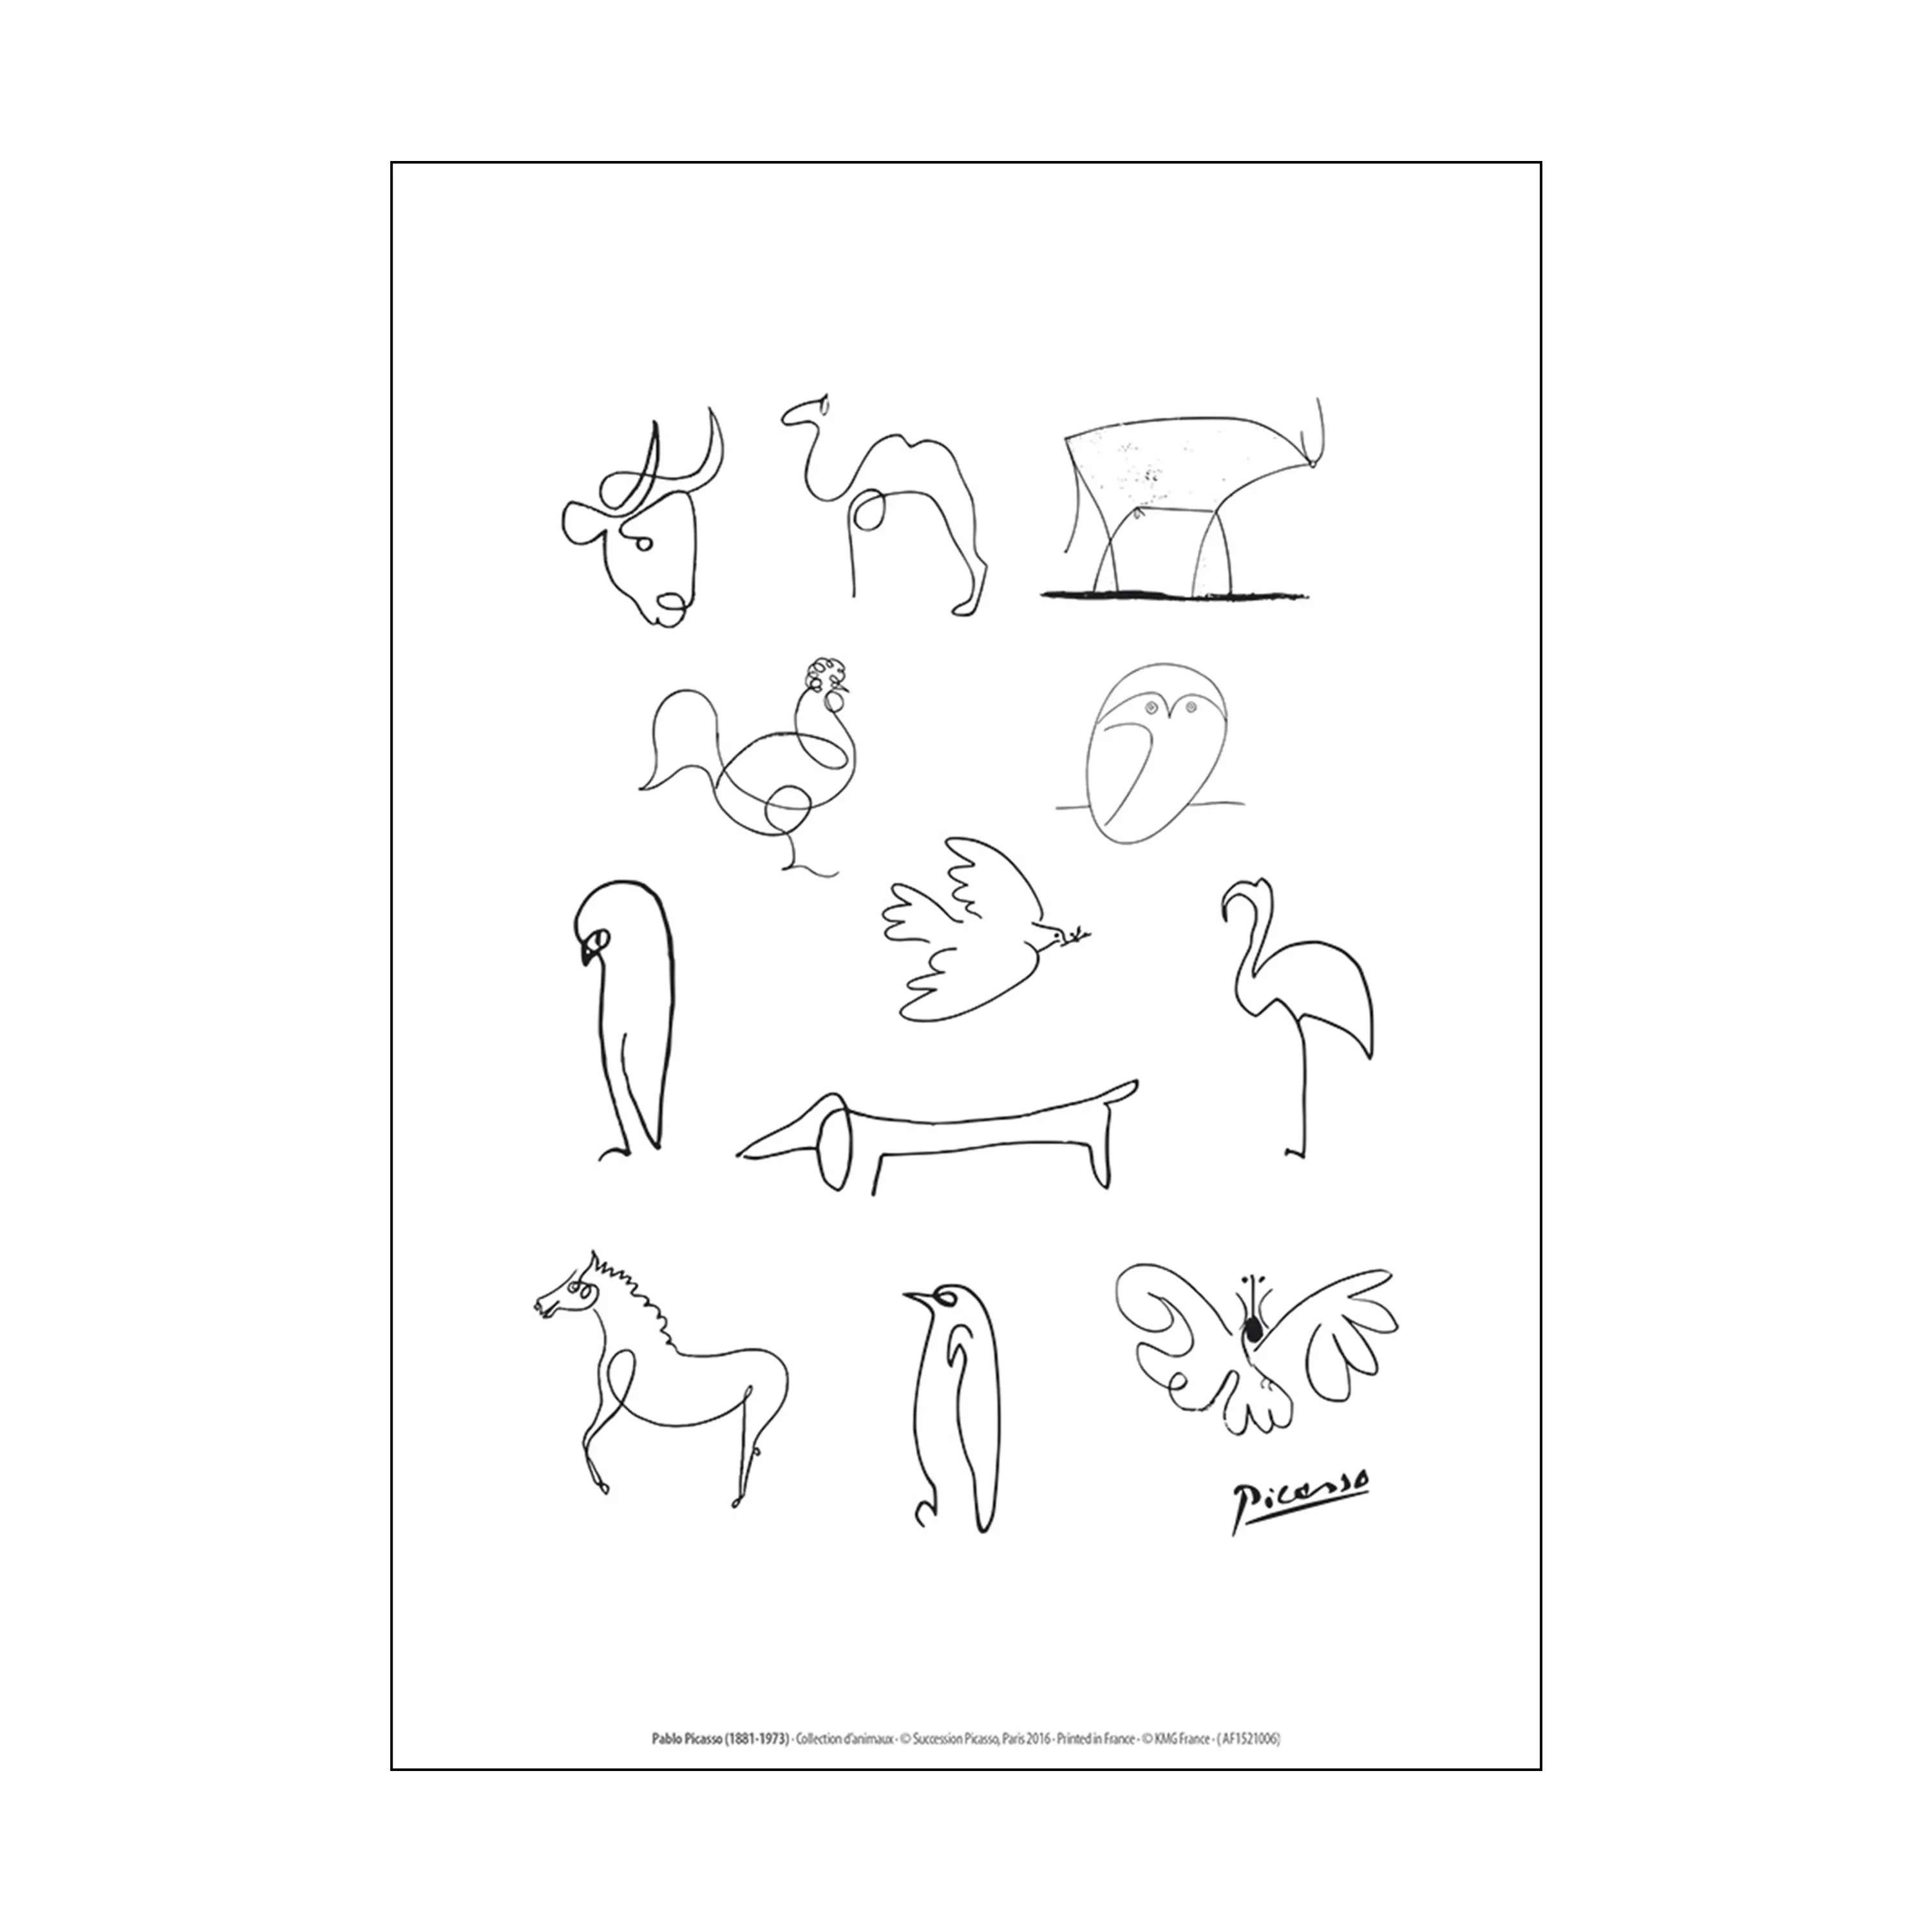 Picasso plakat - Animaux, sort/hvid animaux, large